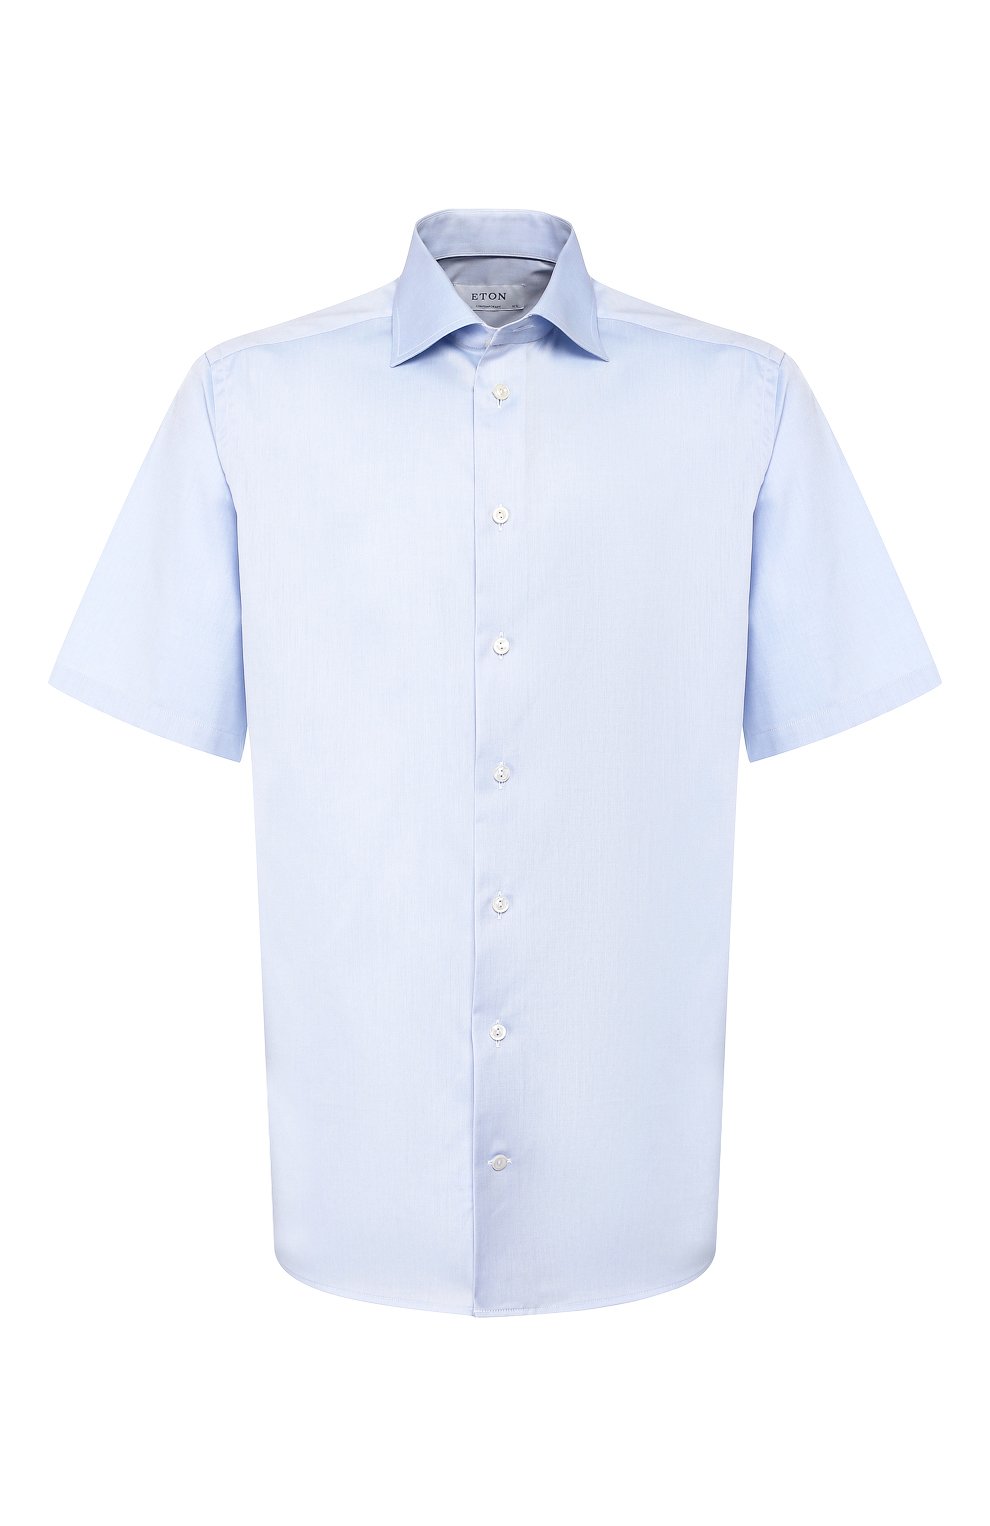 Х б рубашки. Голубая рубашка Eton. Мужская рубашка Eton ЦУМ. Canali сорочка 2022. Хлопковая рубашка.